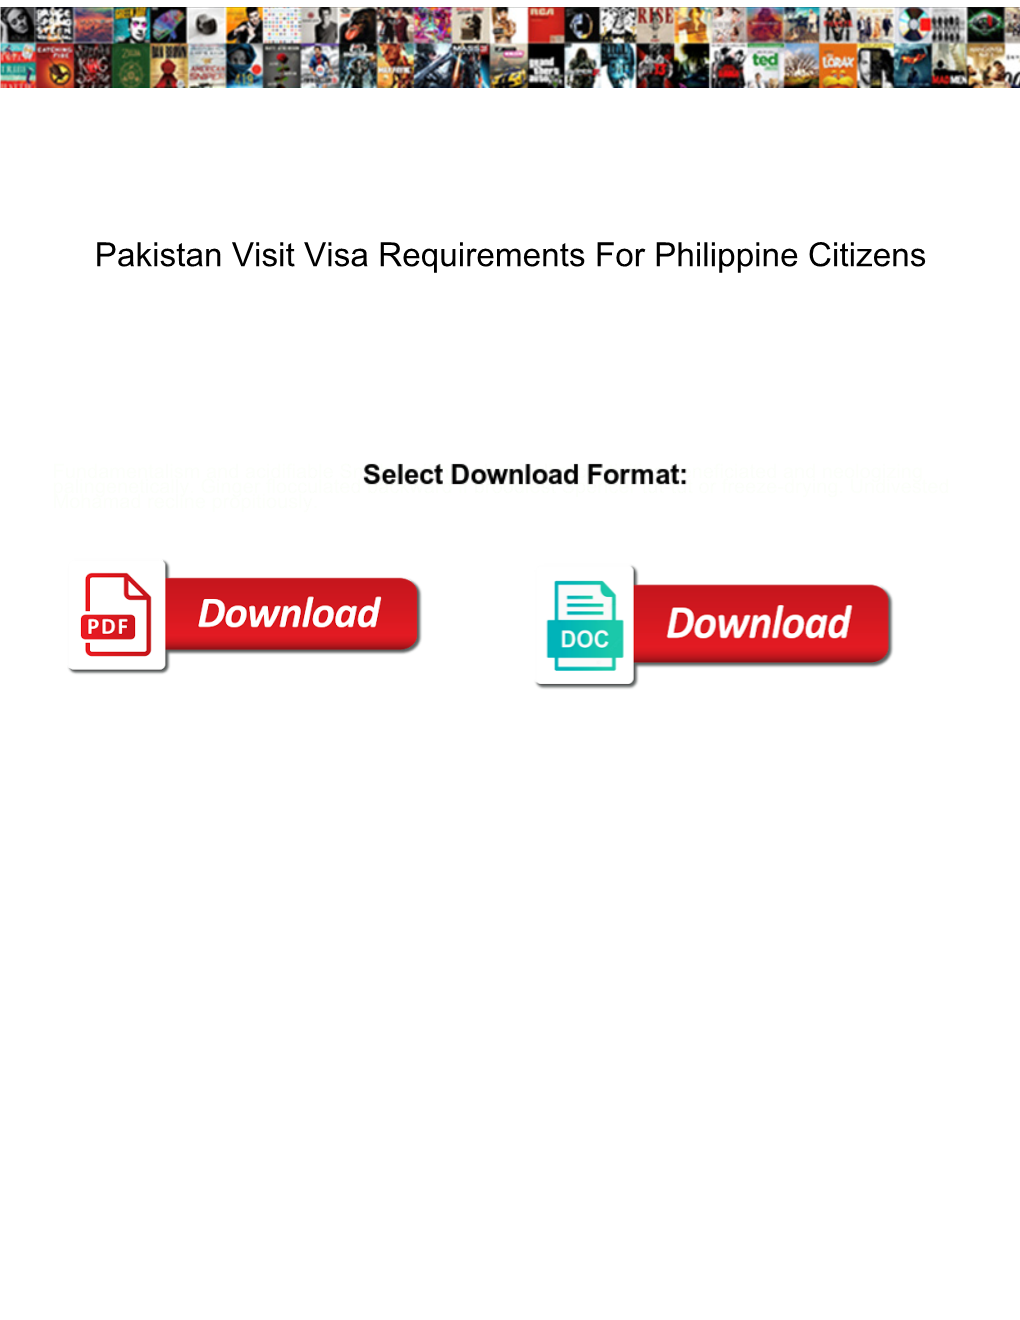 pakistan to philippines visit visa price